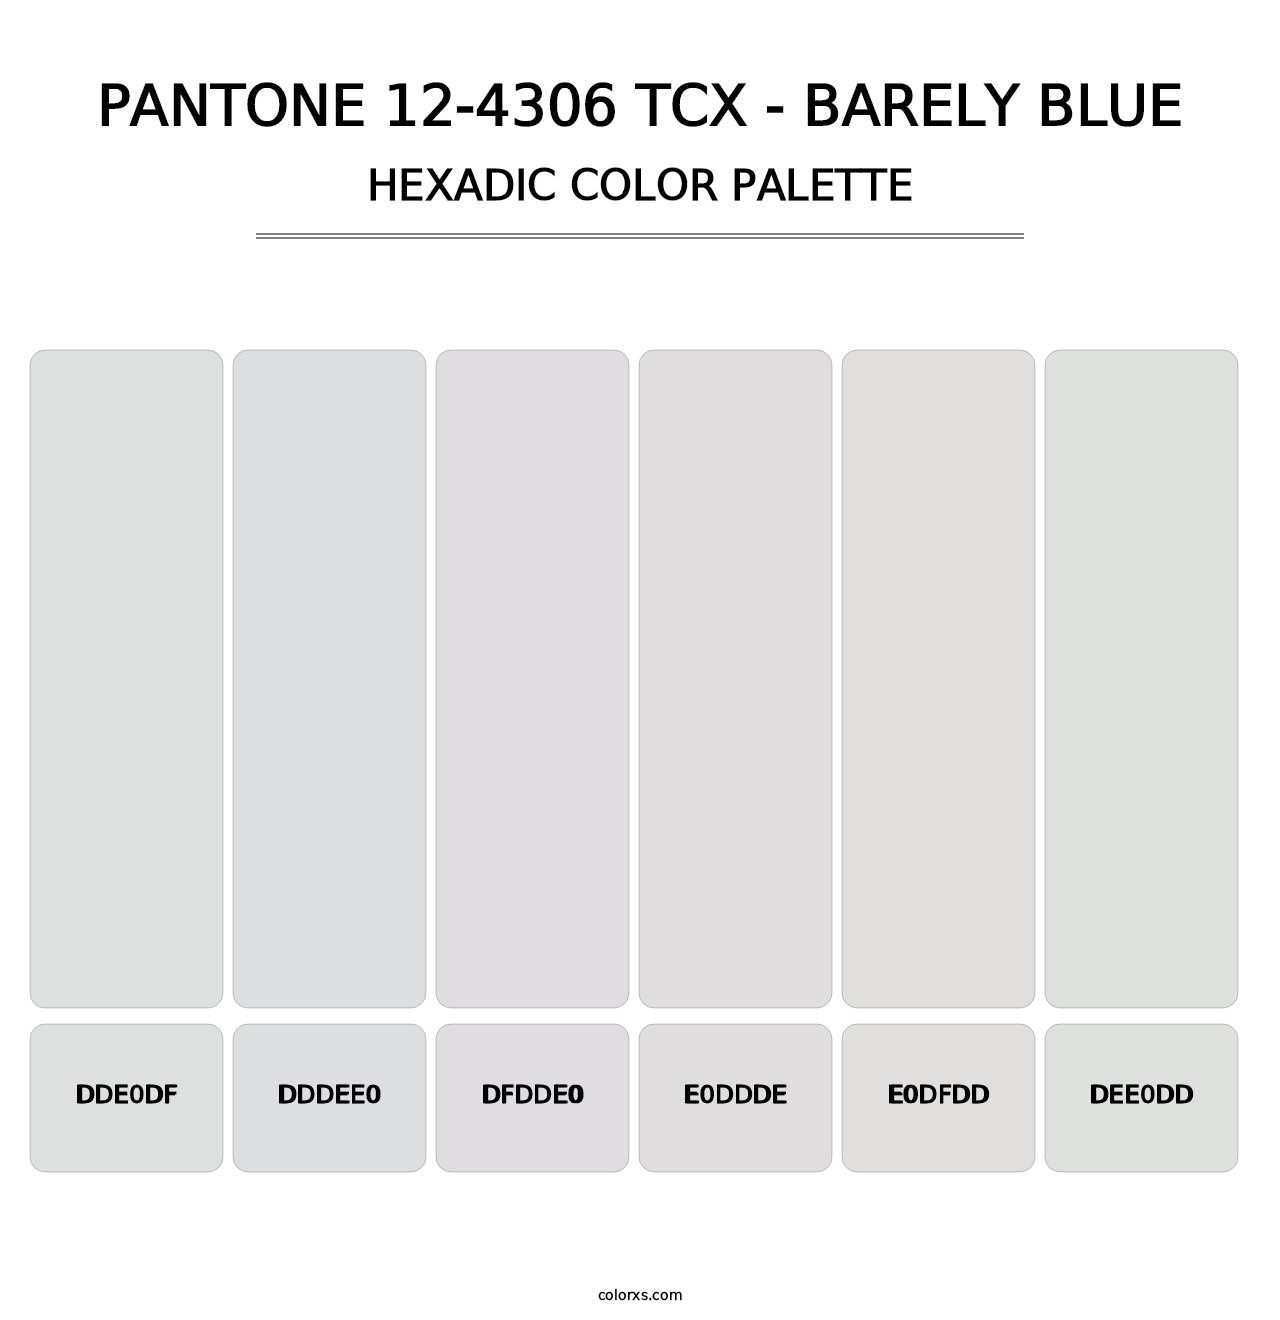 PANTONE 12-4306 TCX - Barely Blue - Hexadic Color Palette